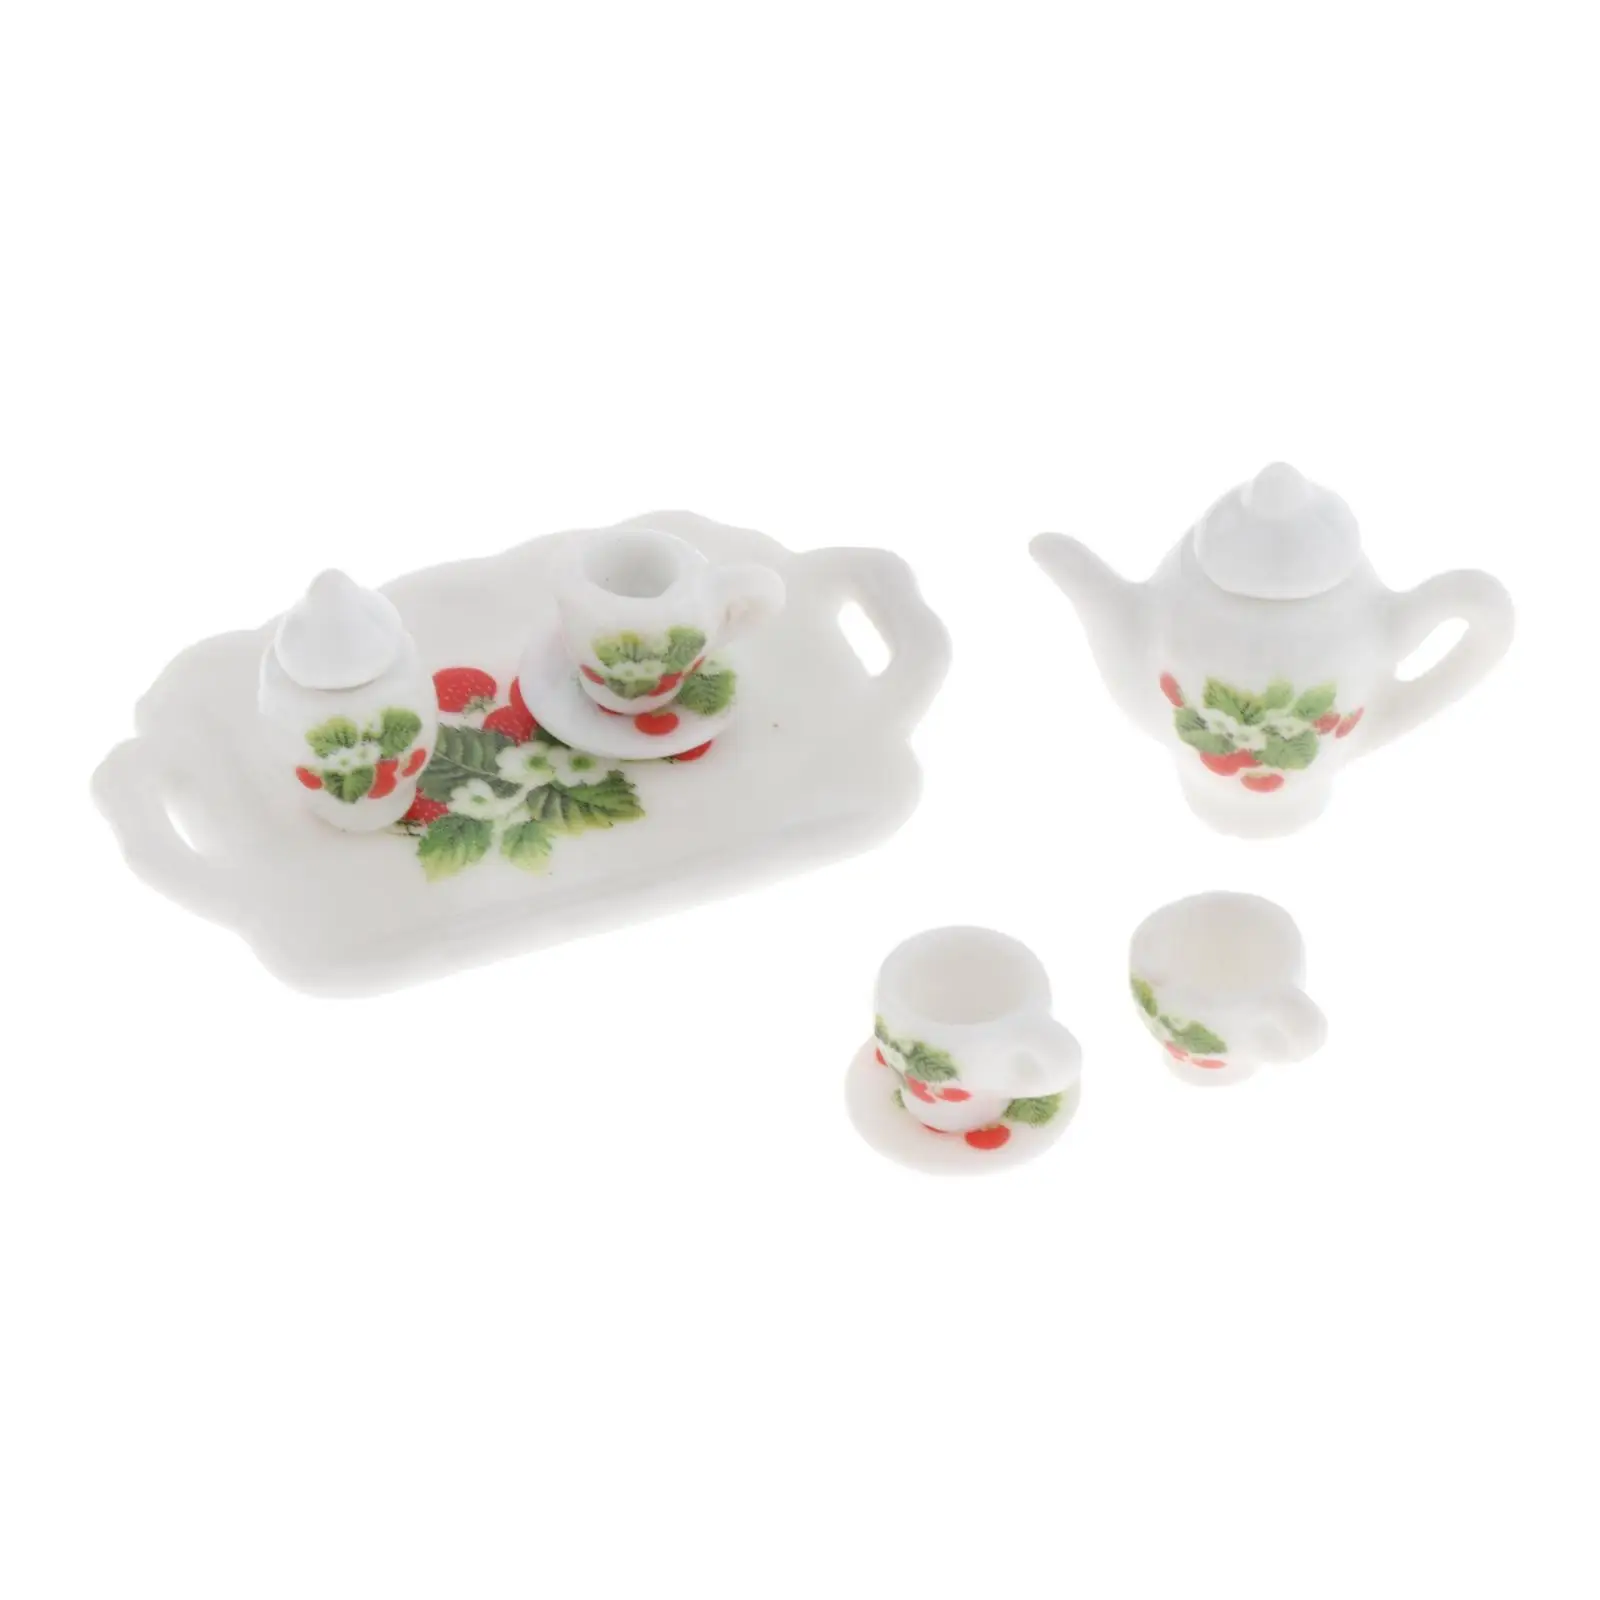 8x 1/12 Dollhouse Porcelain Tea Service Tableware Cooking Game Ornaments